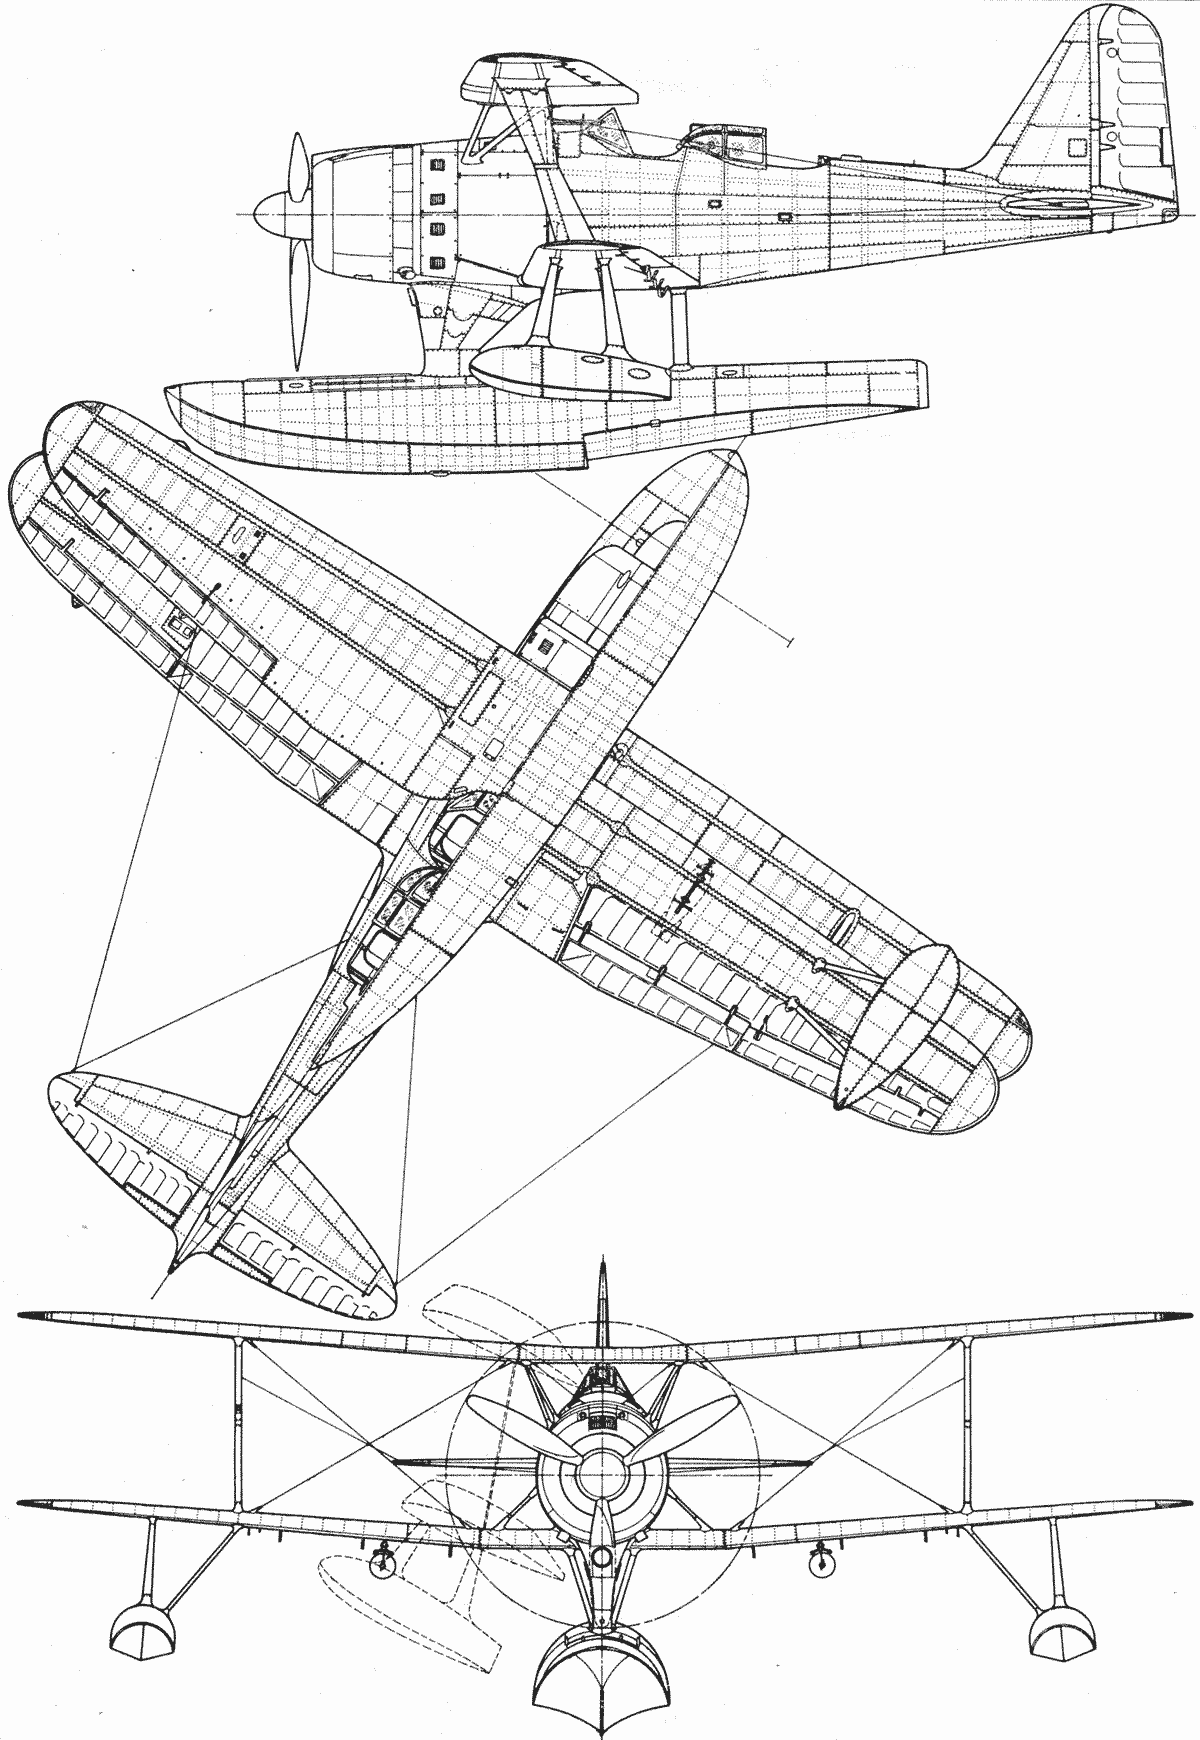 Mitsubishi F1M blueprint